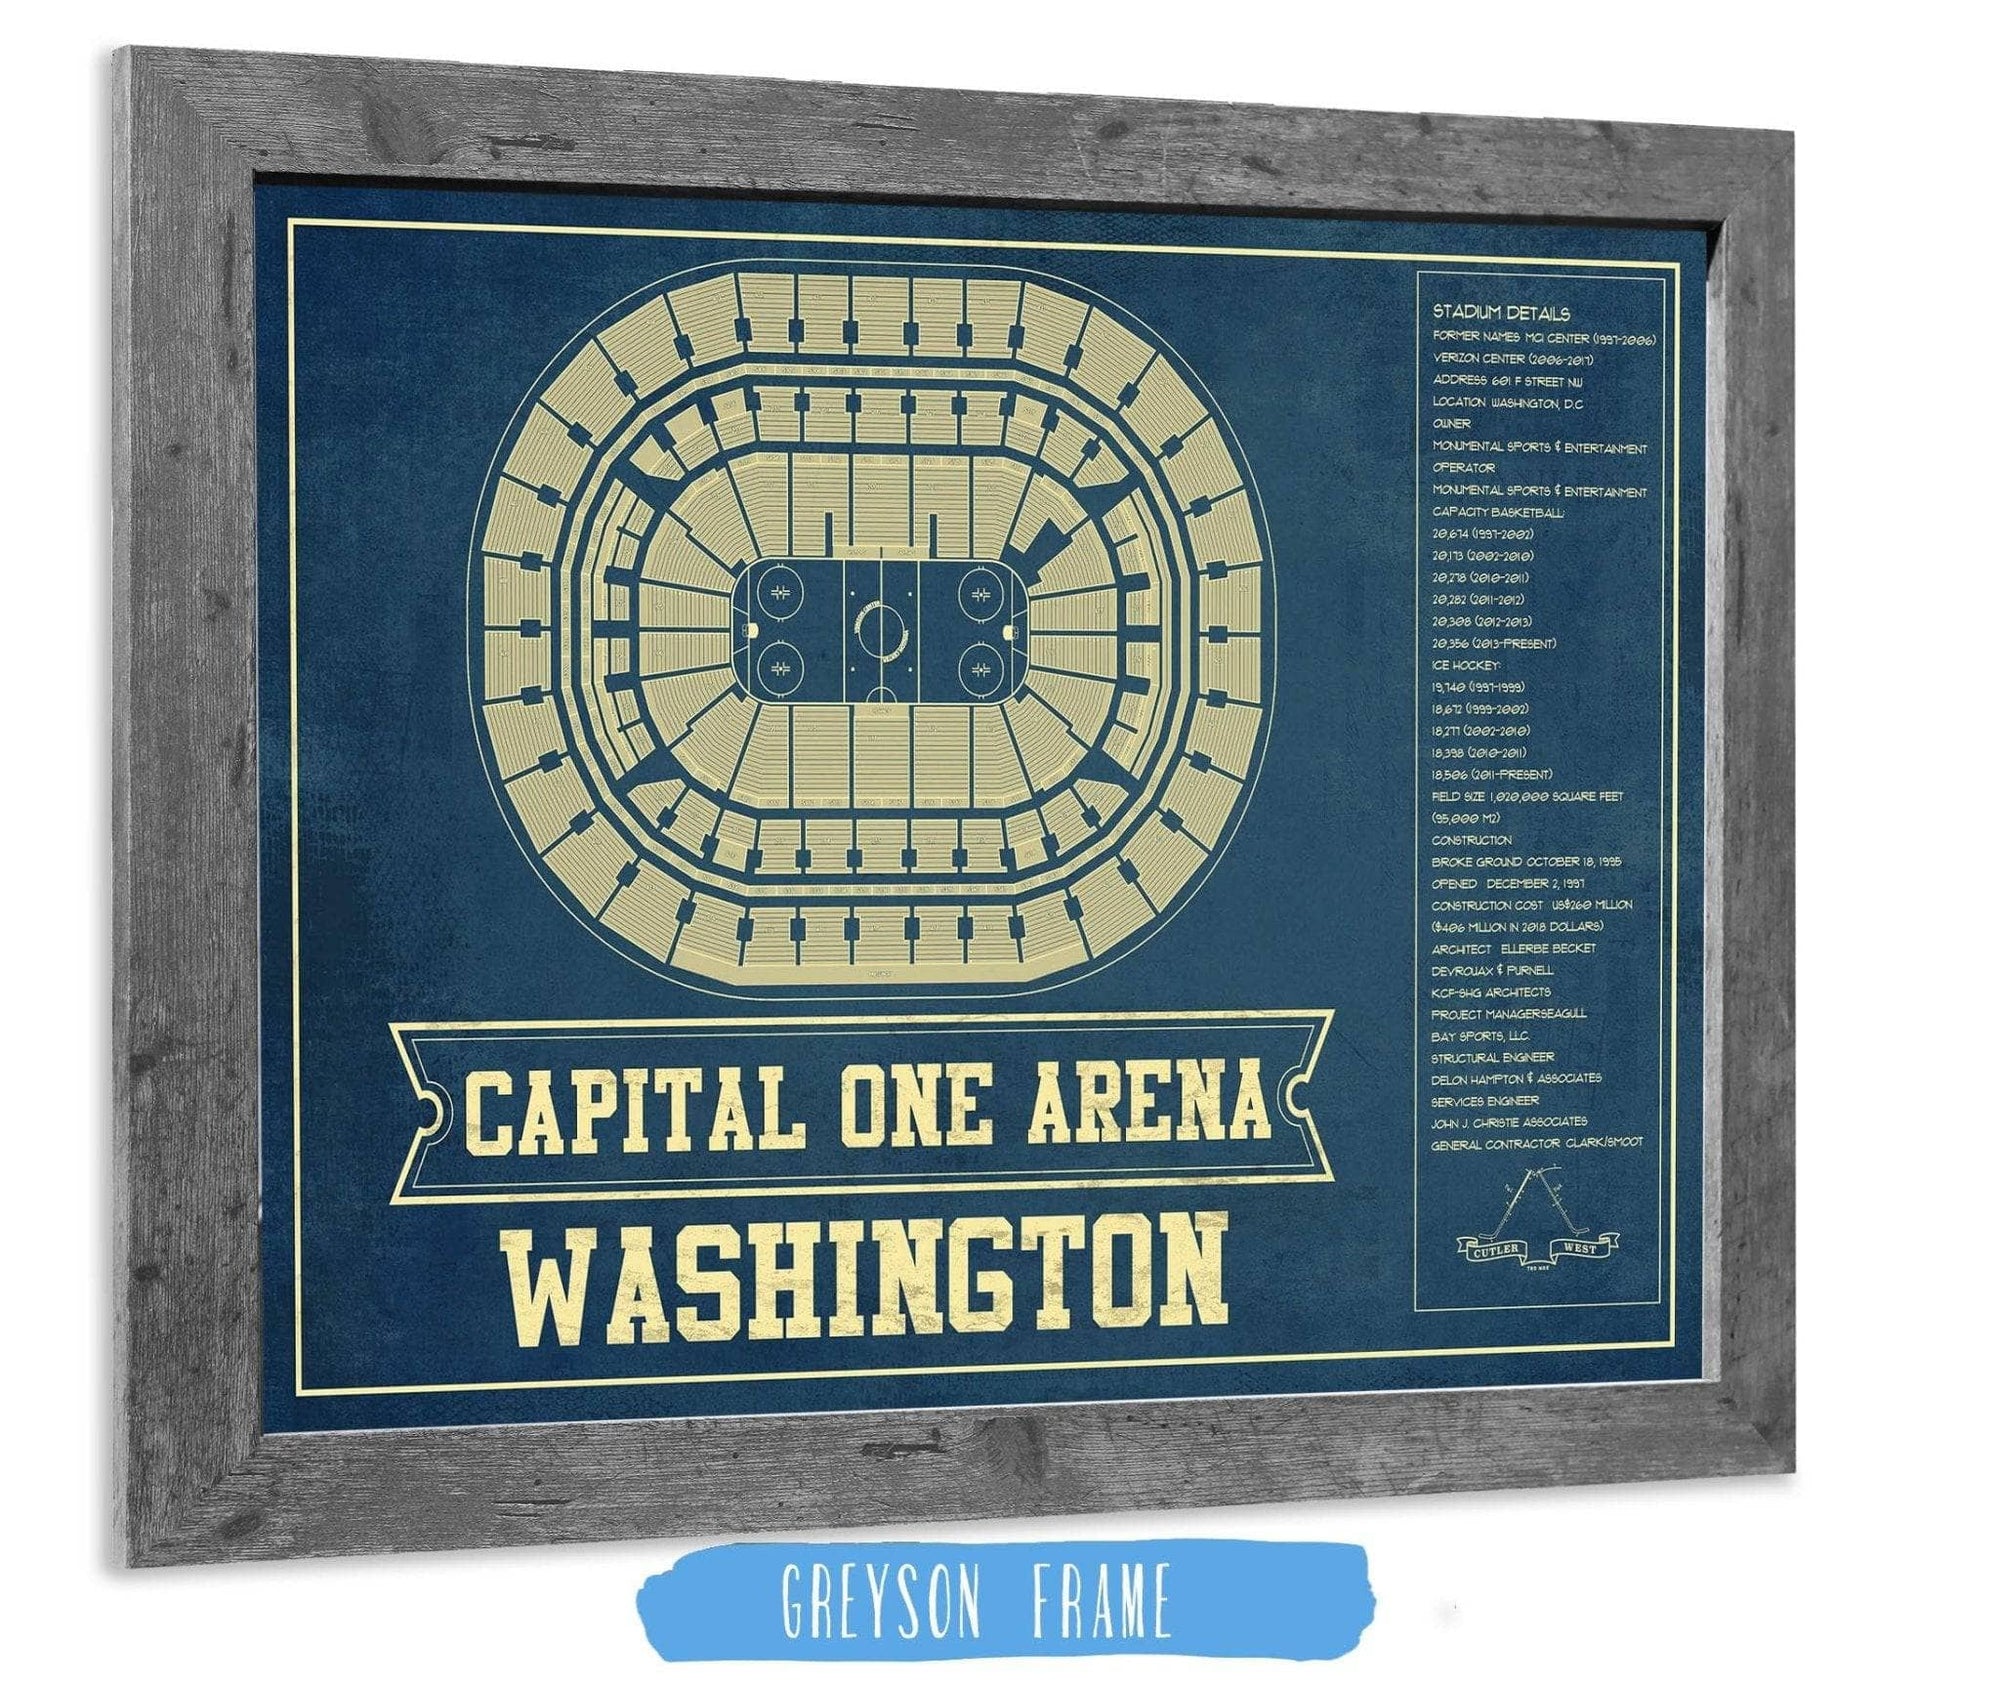 Cutler West 14" x 11" / Greyson Frame Washington Capitals - Capital One Arena Seating Chart Vintage Art Print 673825643-14"-x-11"81717